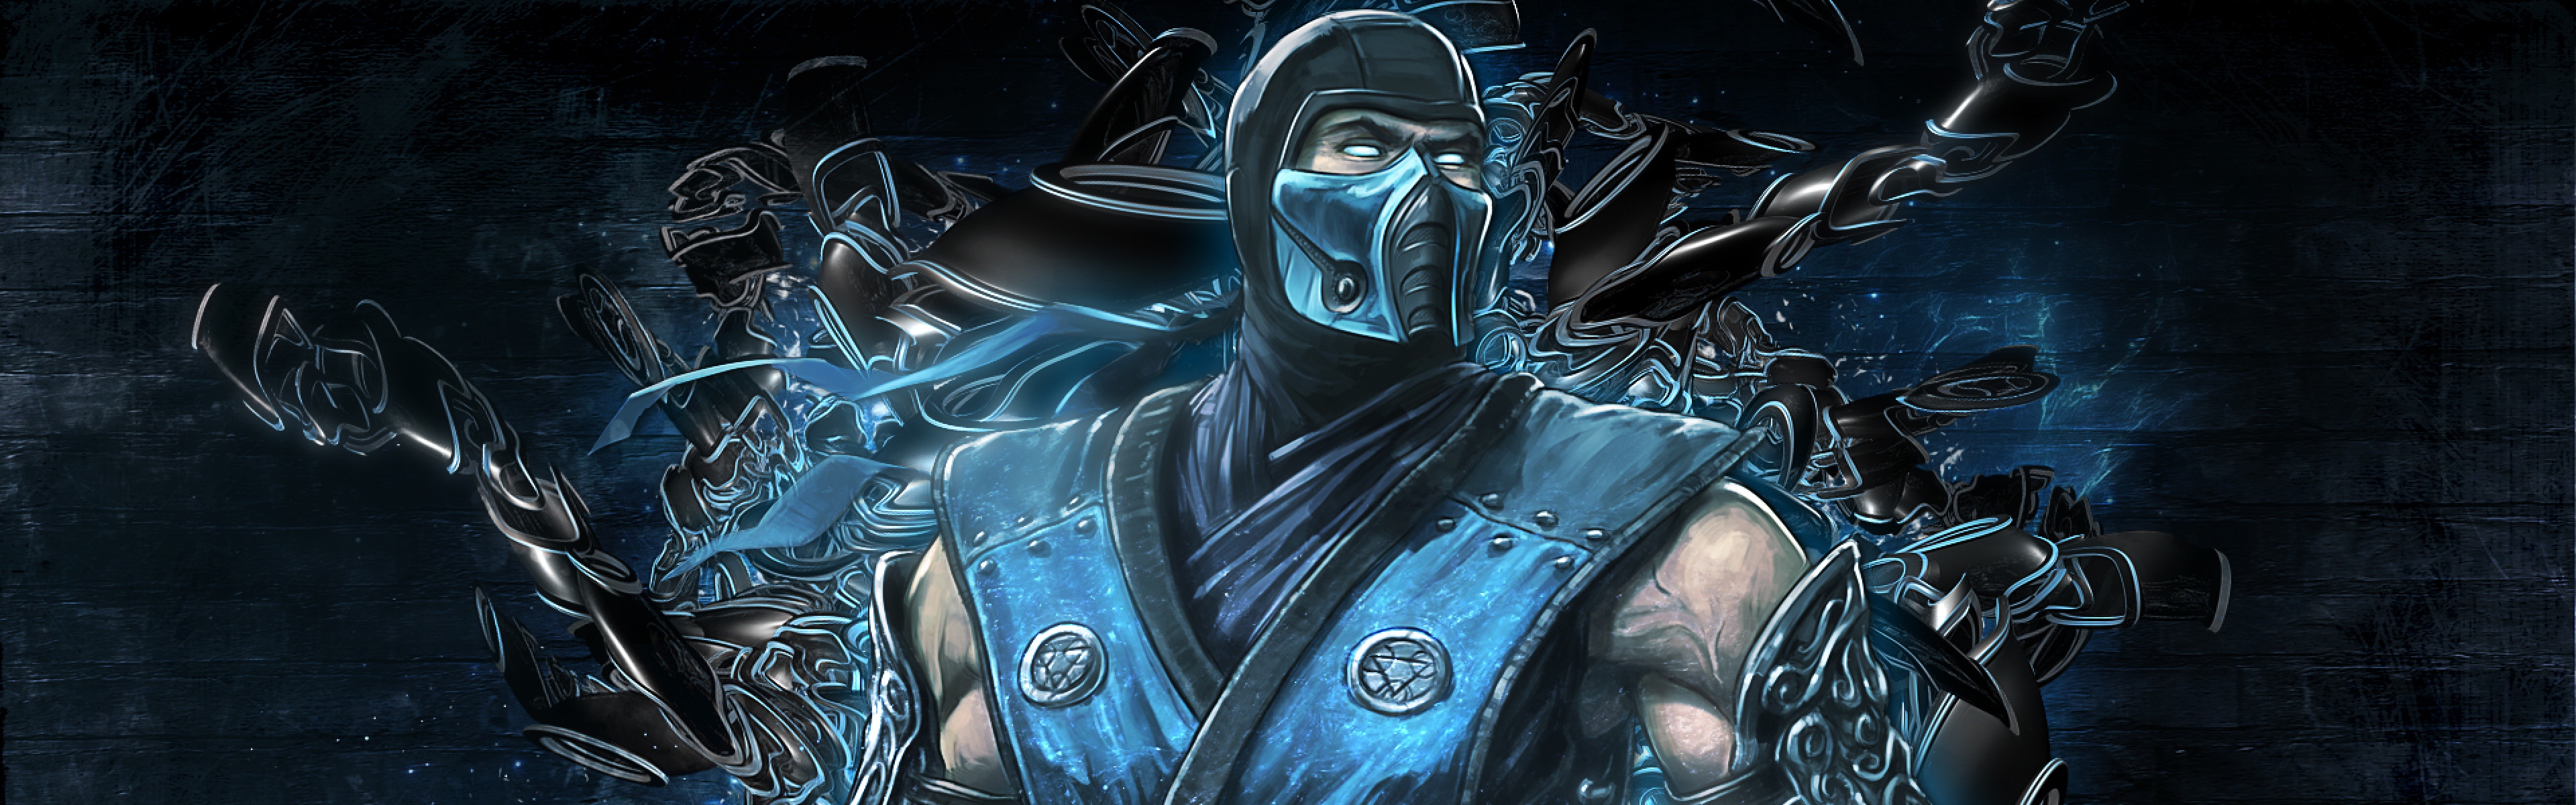 Mortal Kombat Sub Zero Wallpaper